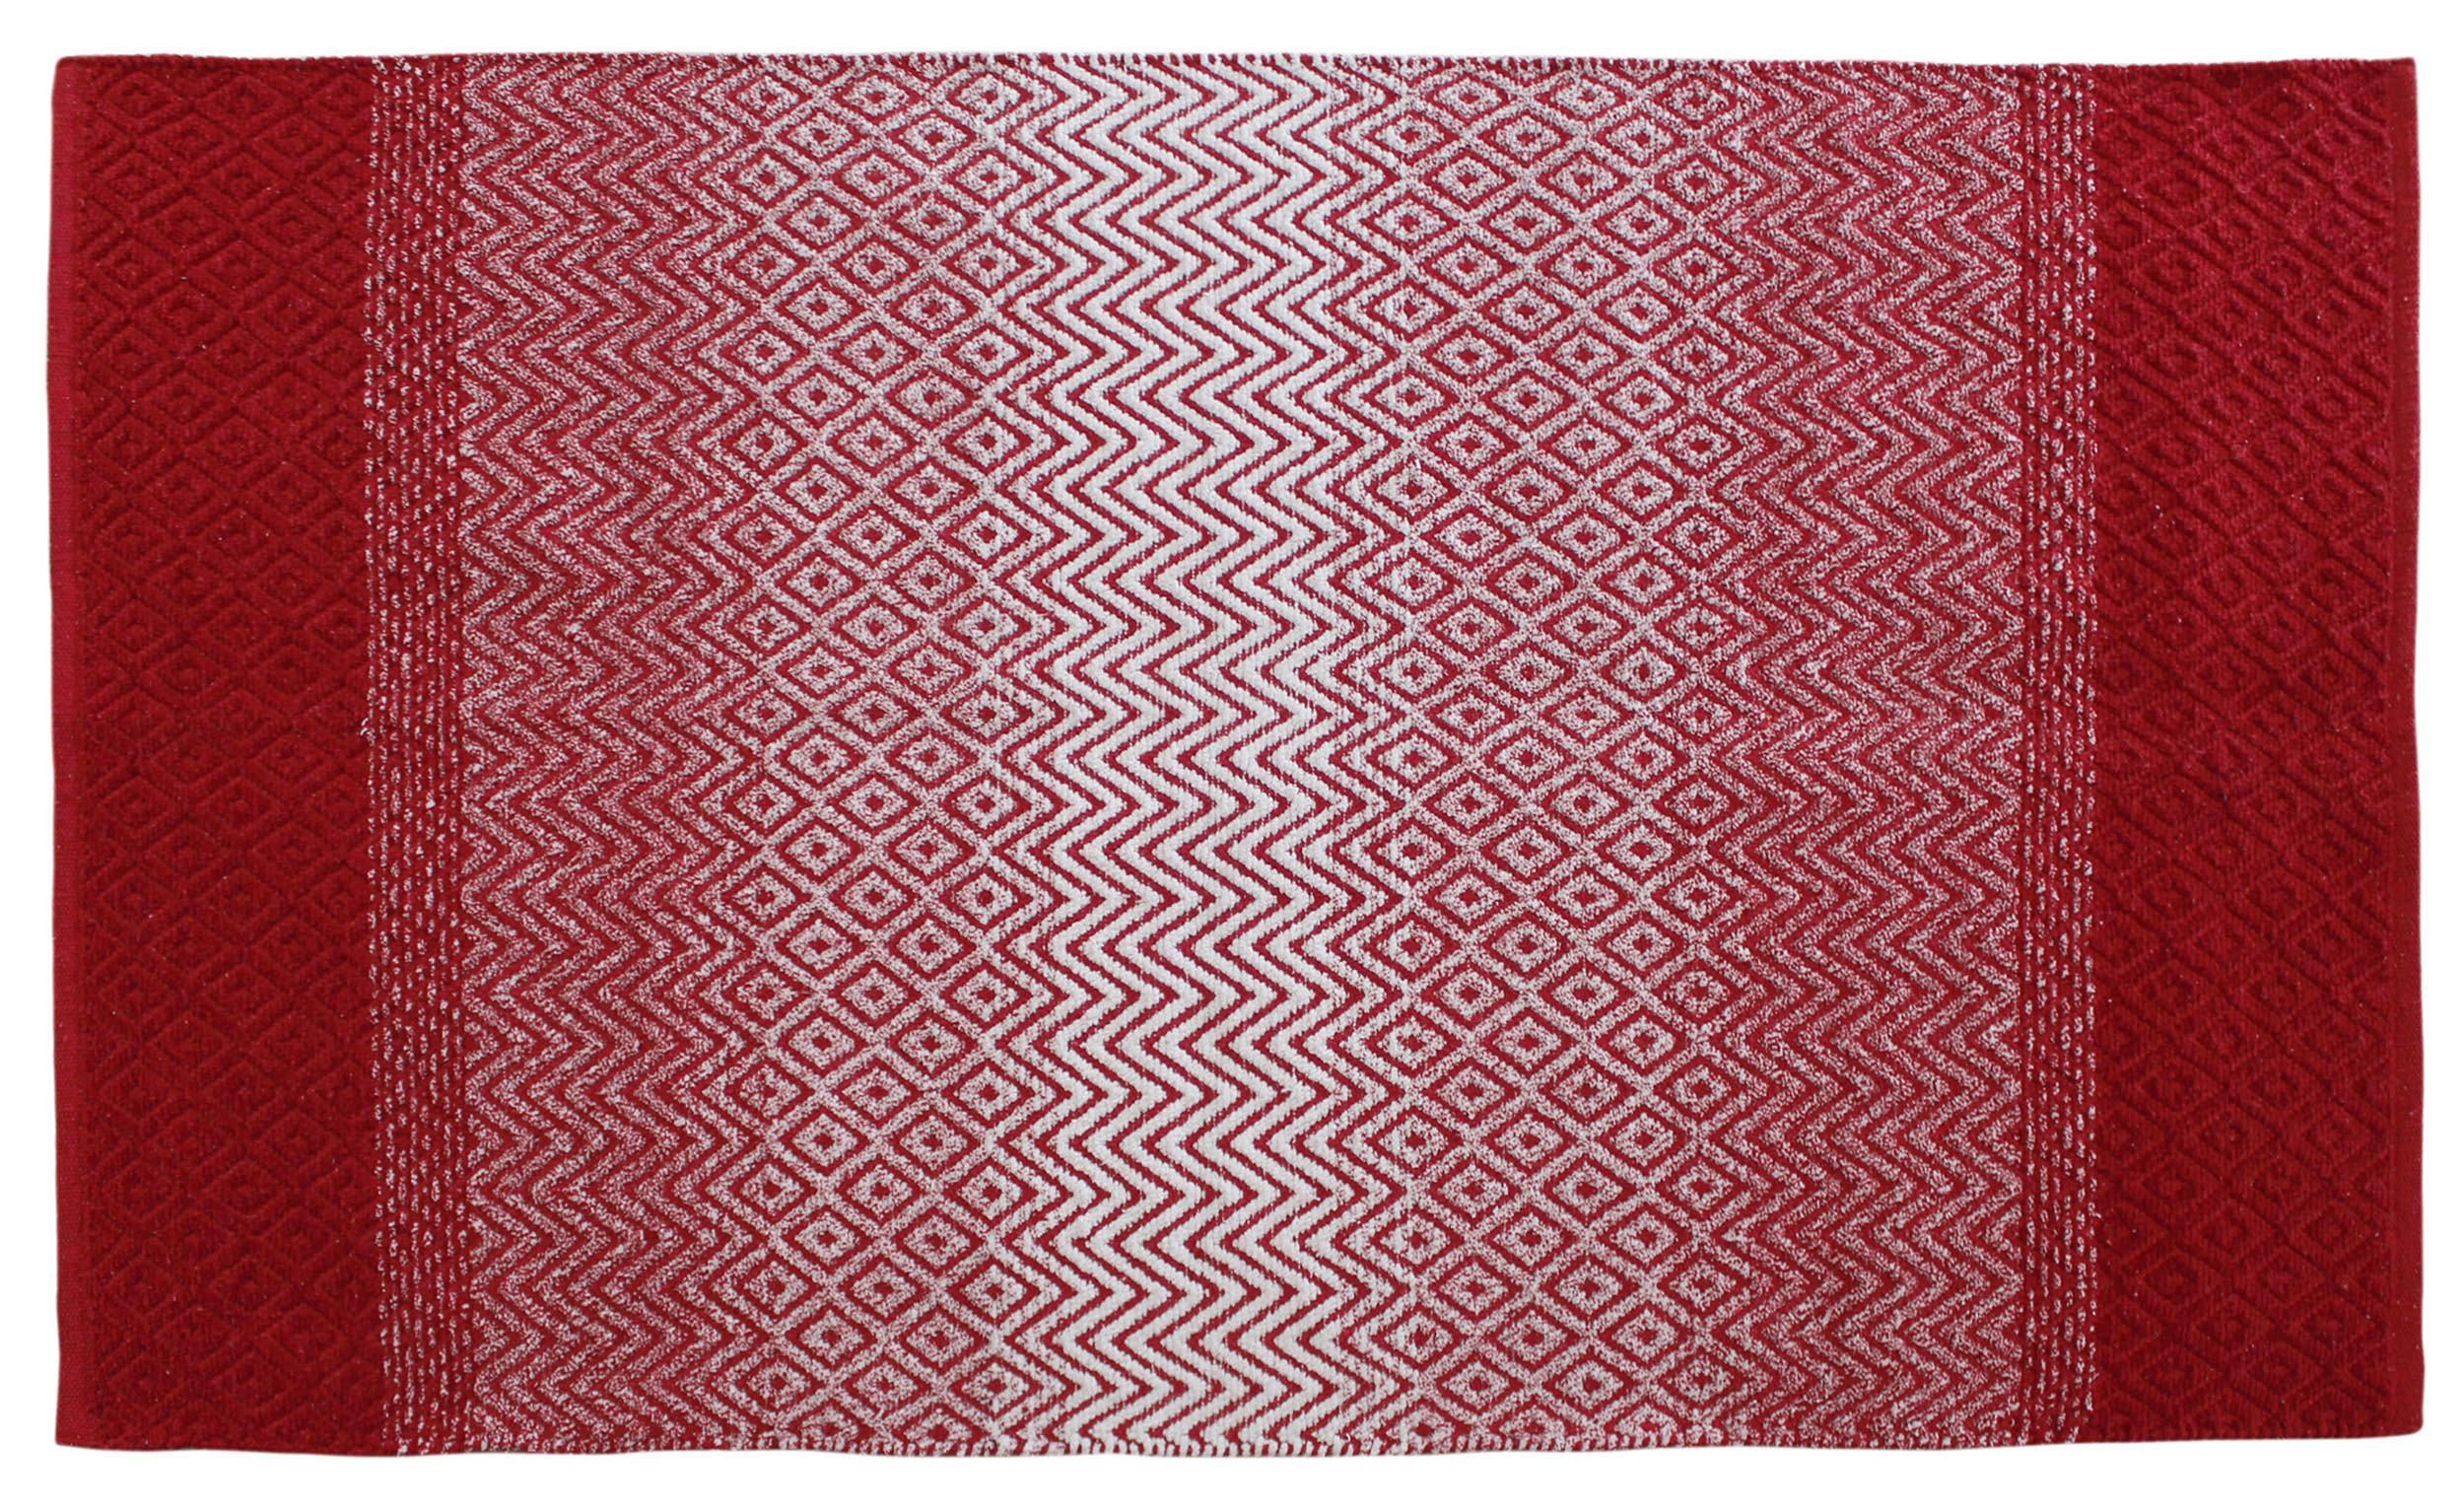 Tkaný Koberec Malta 2, 100/150cm, Červená - červená, Basics, textil (100/150cm) - Modern Living